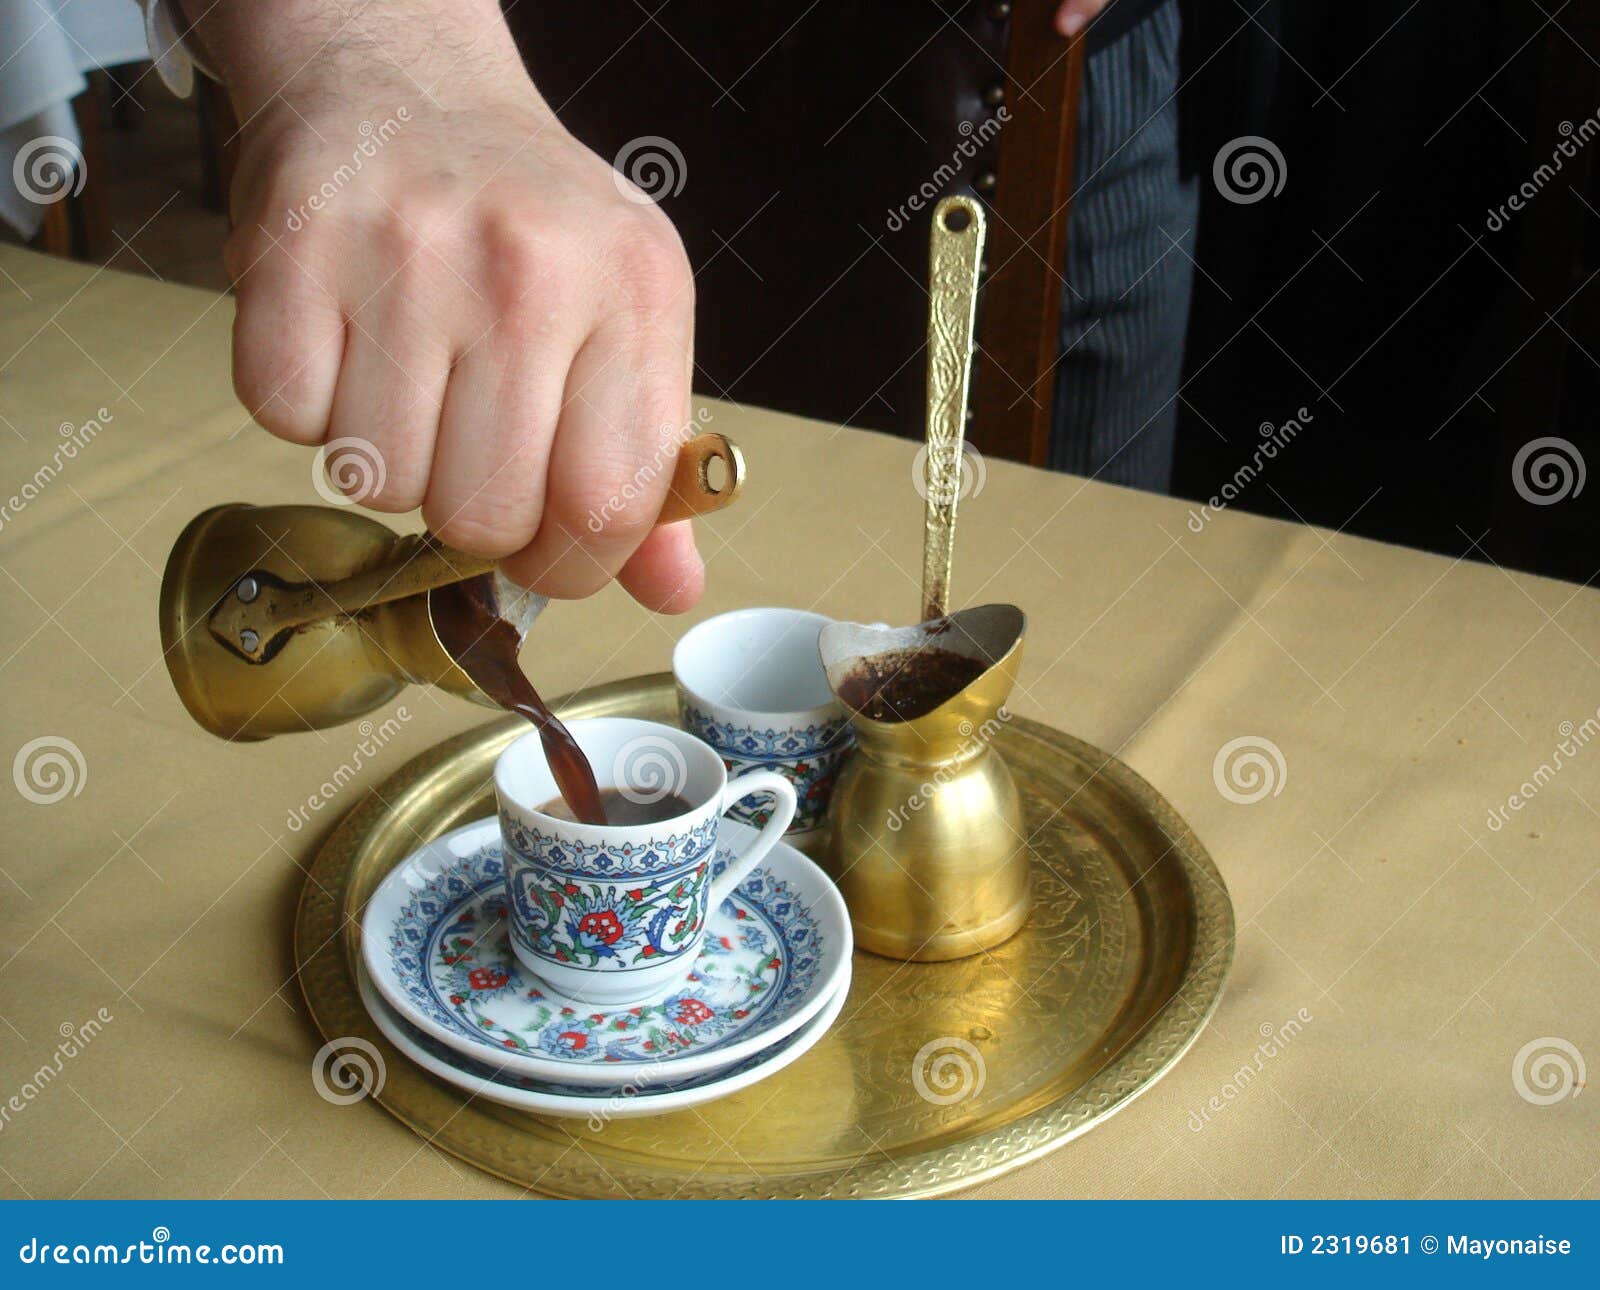 preparation for turkish coffee